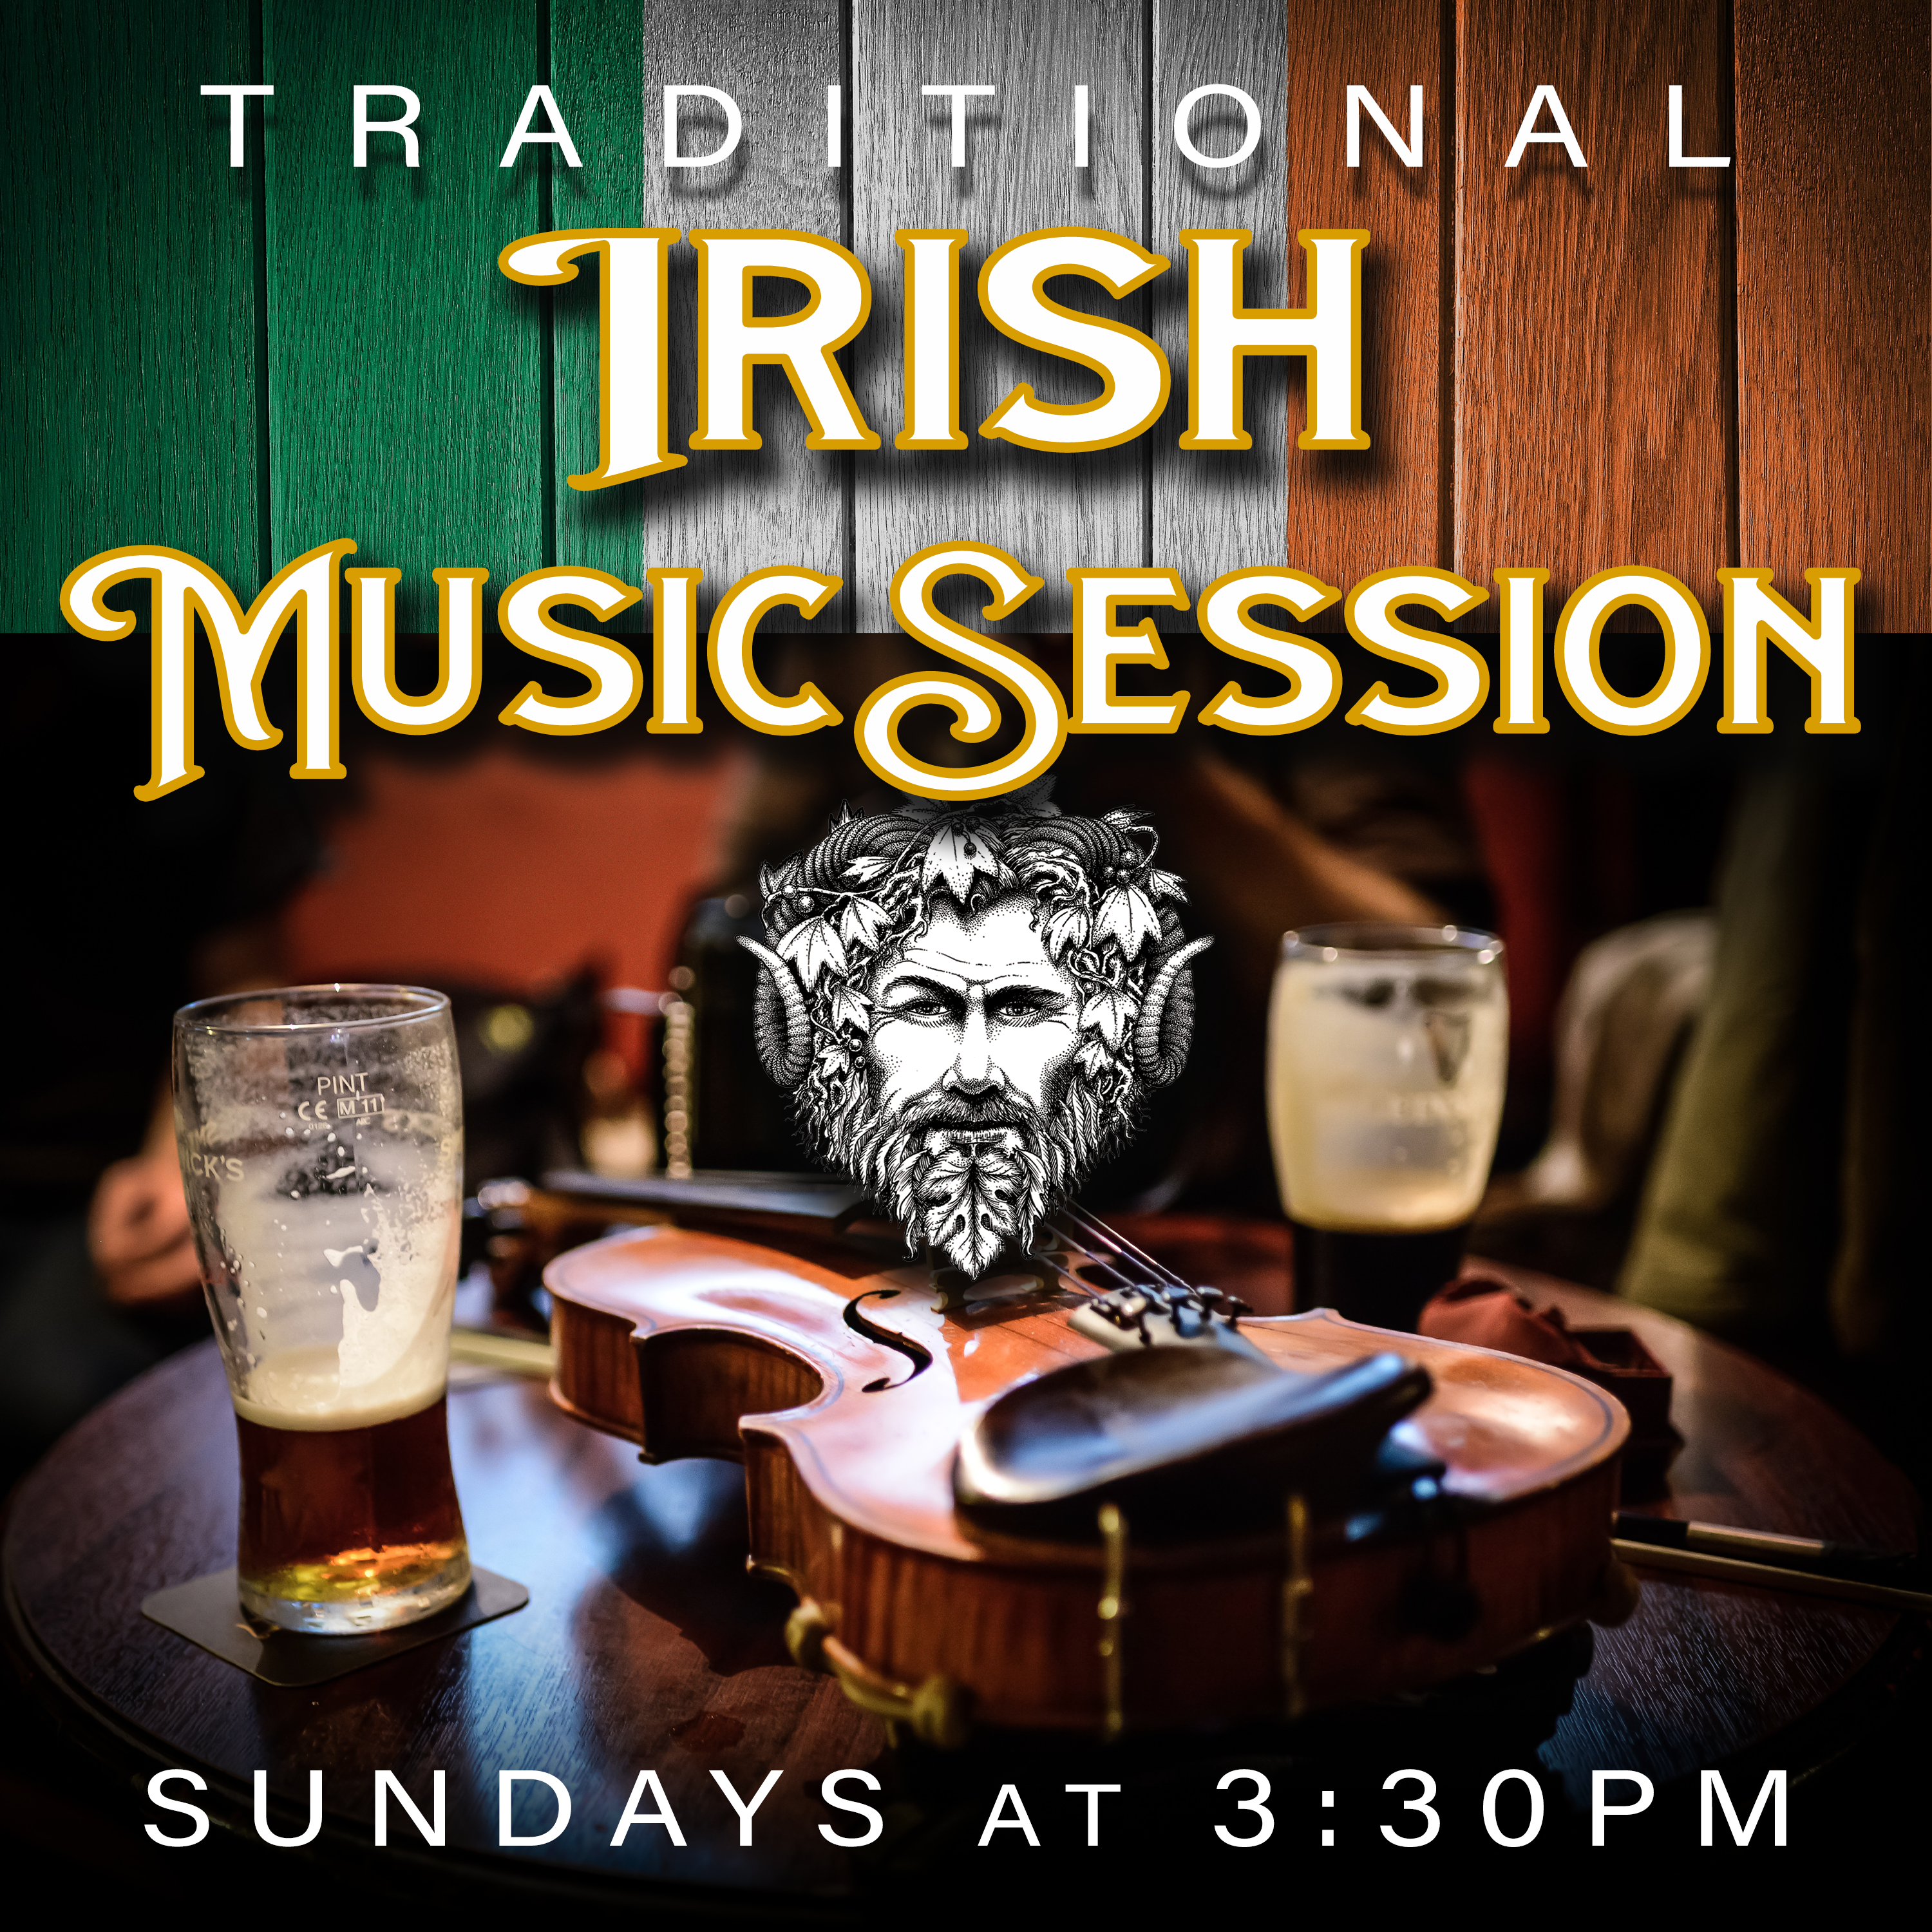 TRADITIONAL IRISH MUSIC SESSION